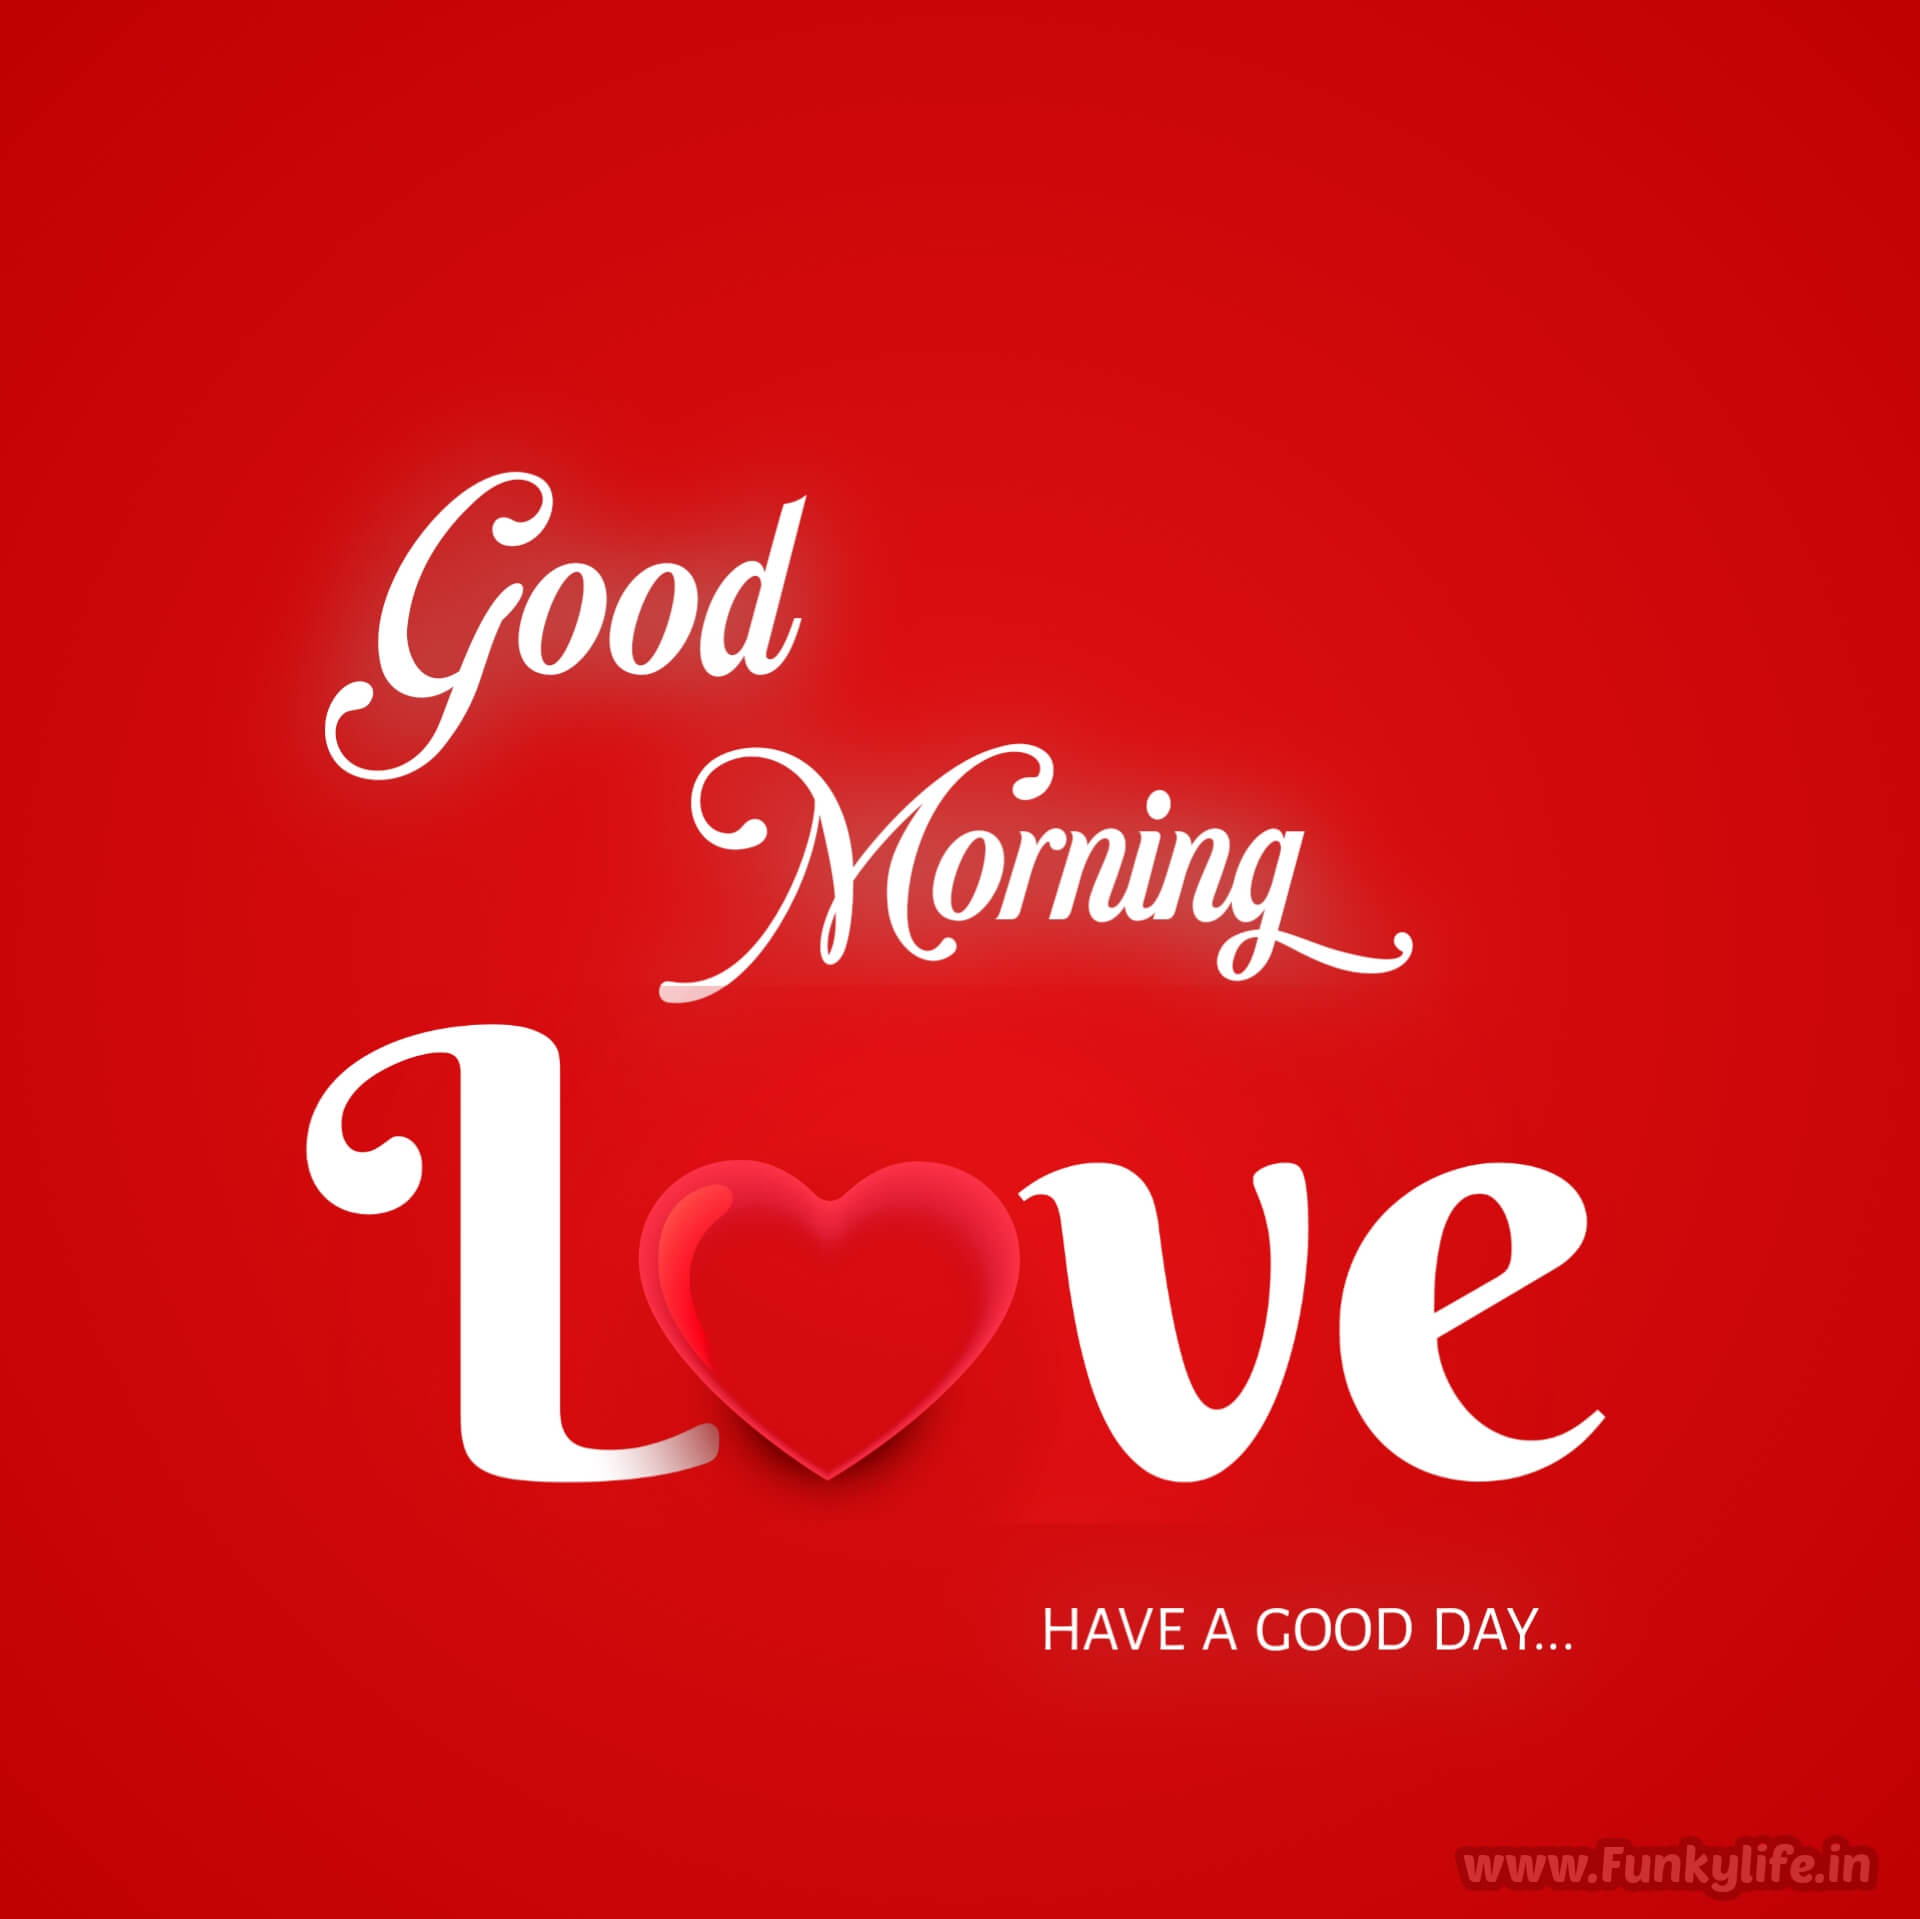 Good Morning Image For Love